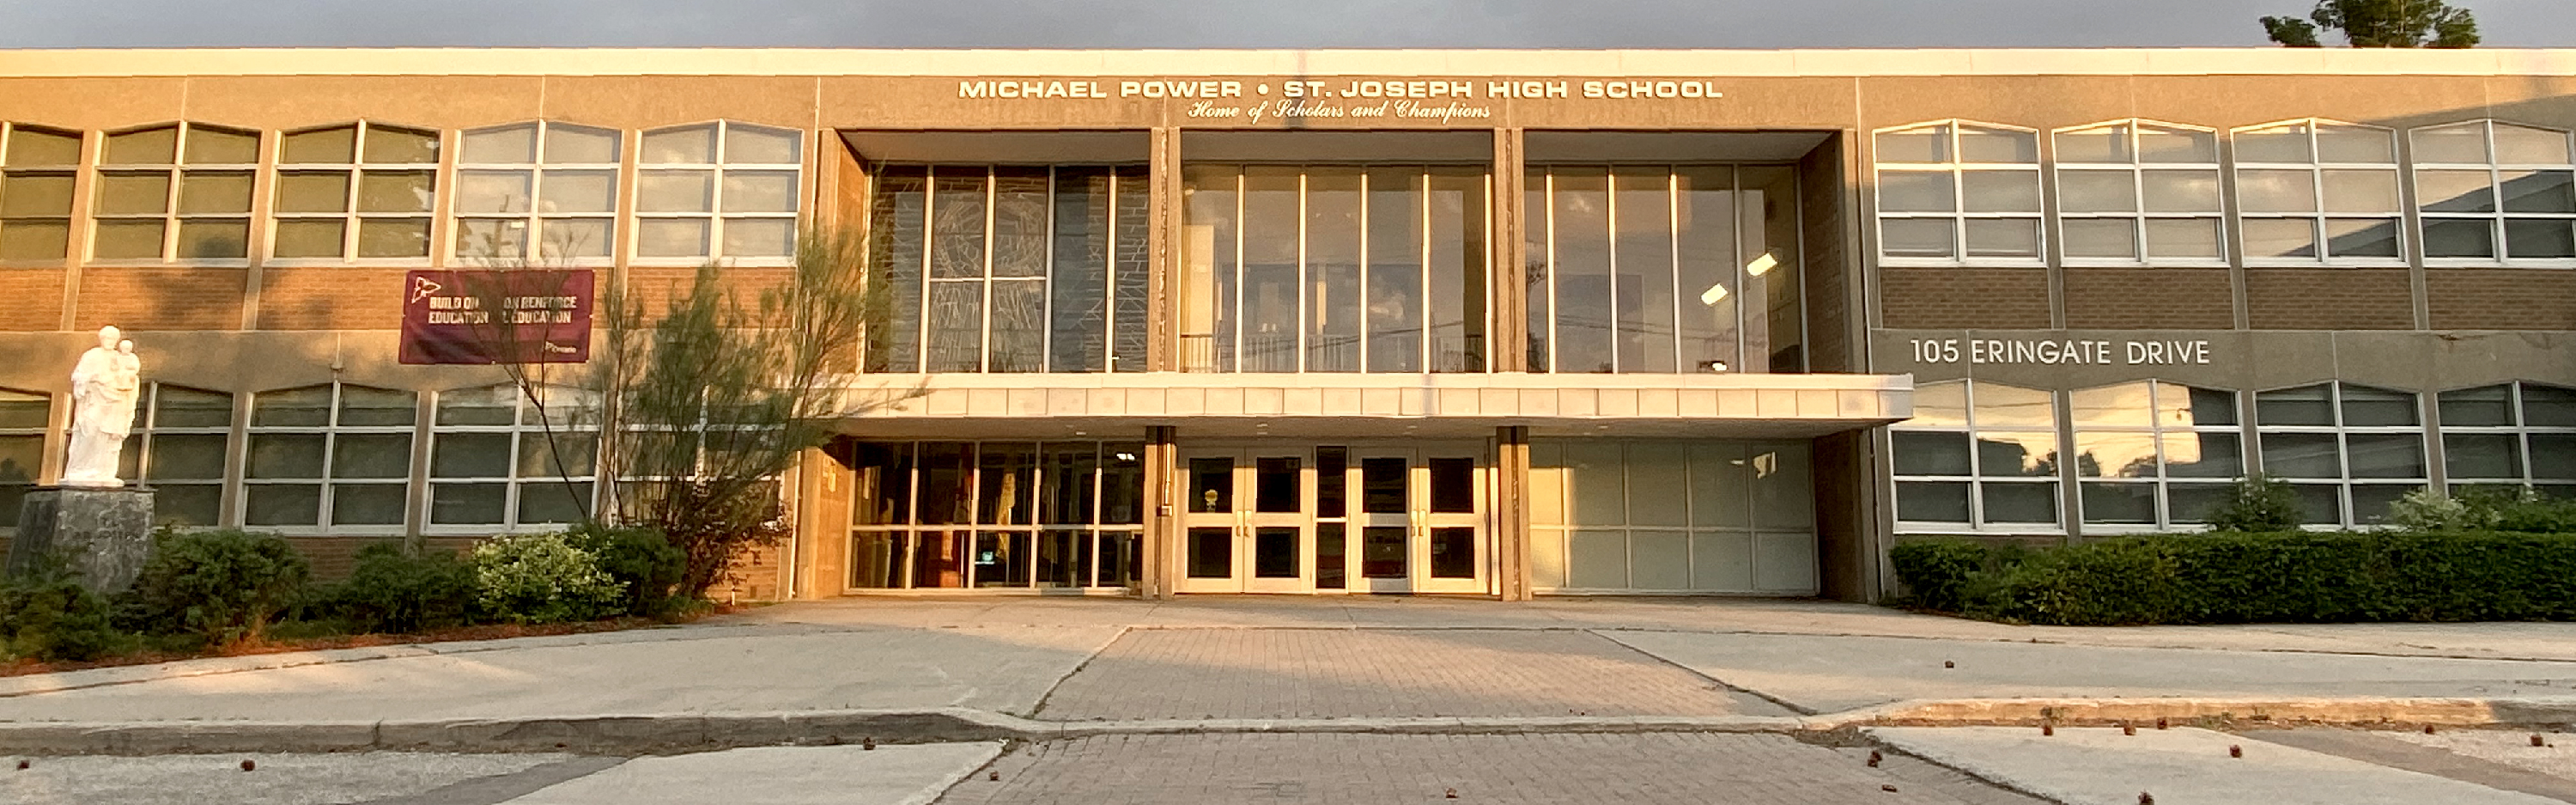 Front of MPSJ school building